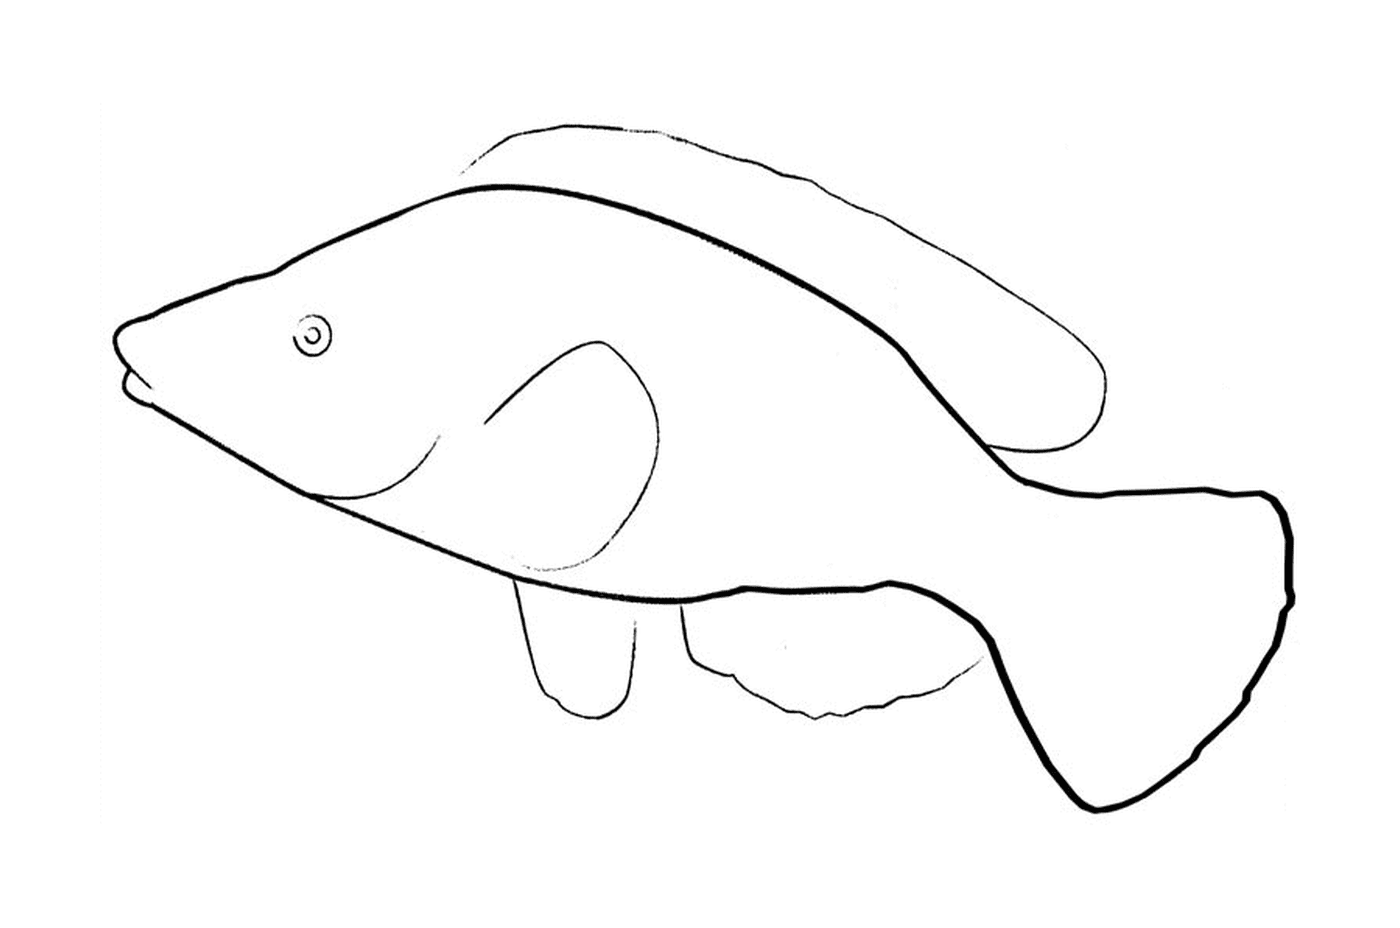  Peixes desenho abril 